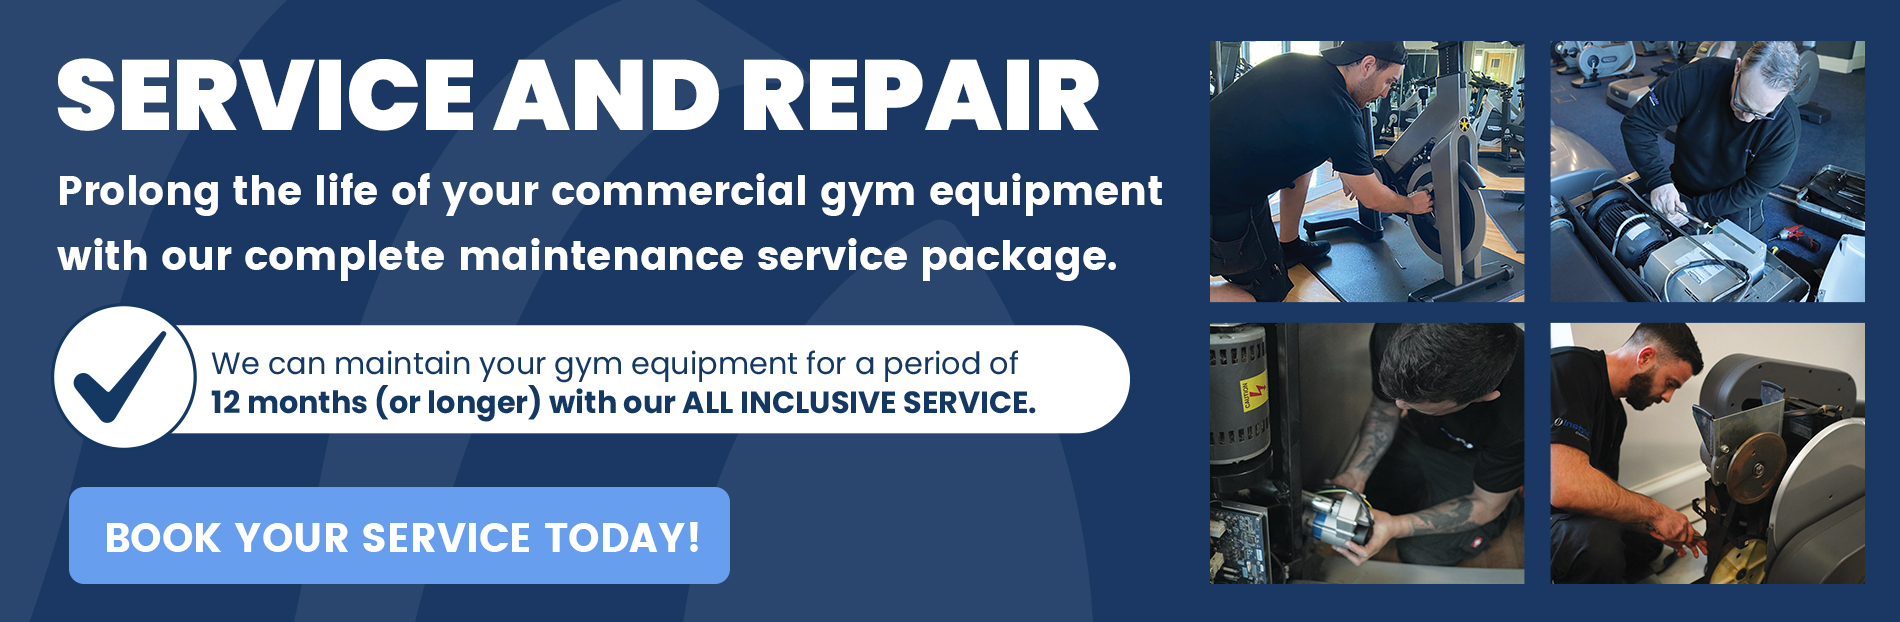 Gym Equipment Service & Repair